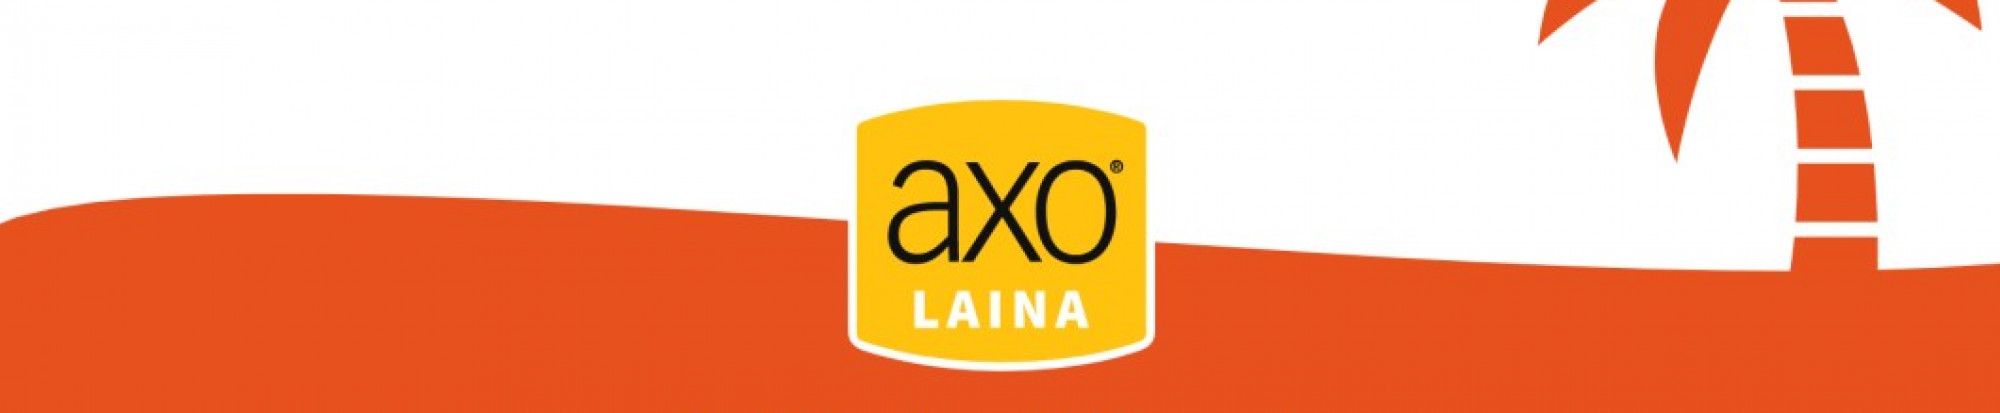 Axo Finance Oy